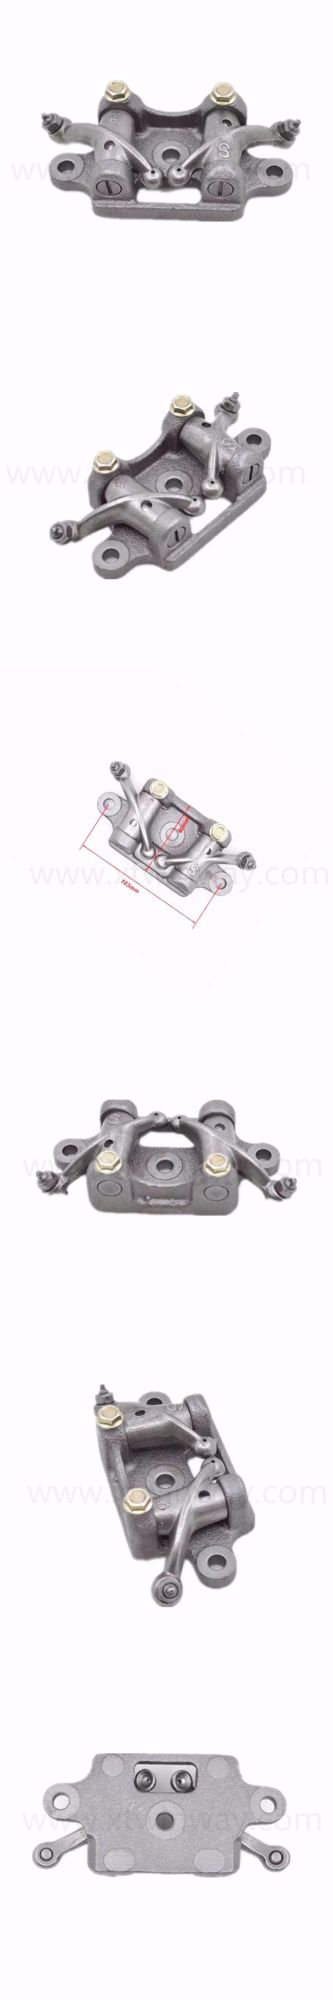 Motorcycle Upper Rocker Arm for Honda Cg150 Engine Spare Parts